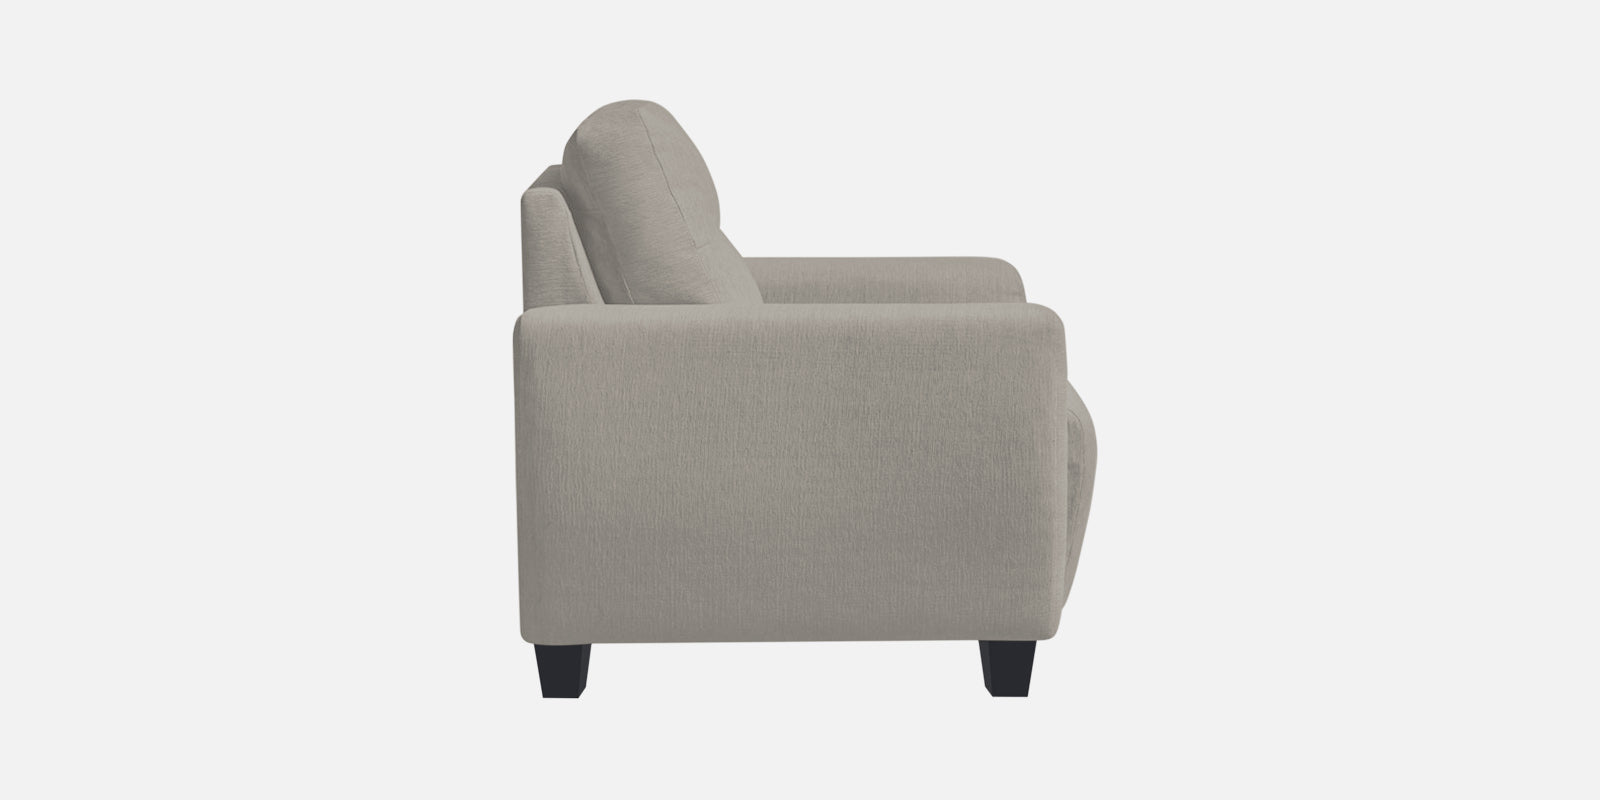 Bakadi Fabric 2 Seater Sofa in Lit Grey Colour